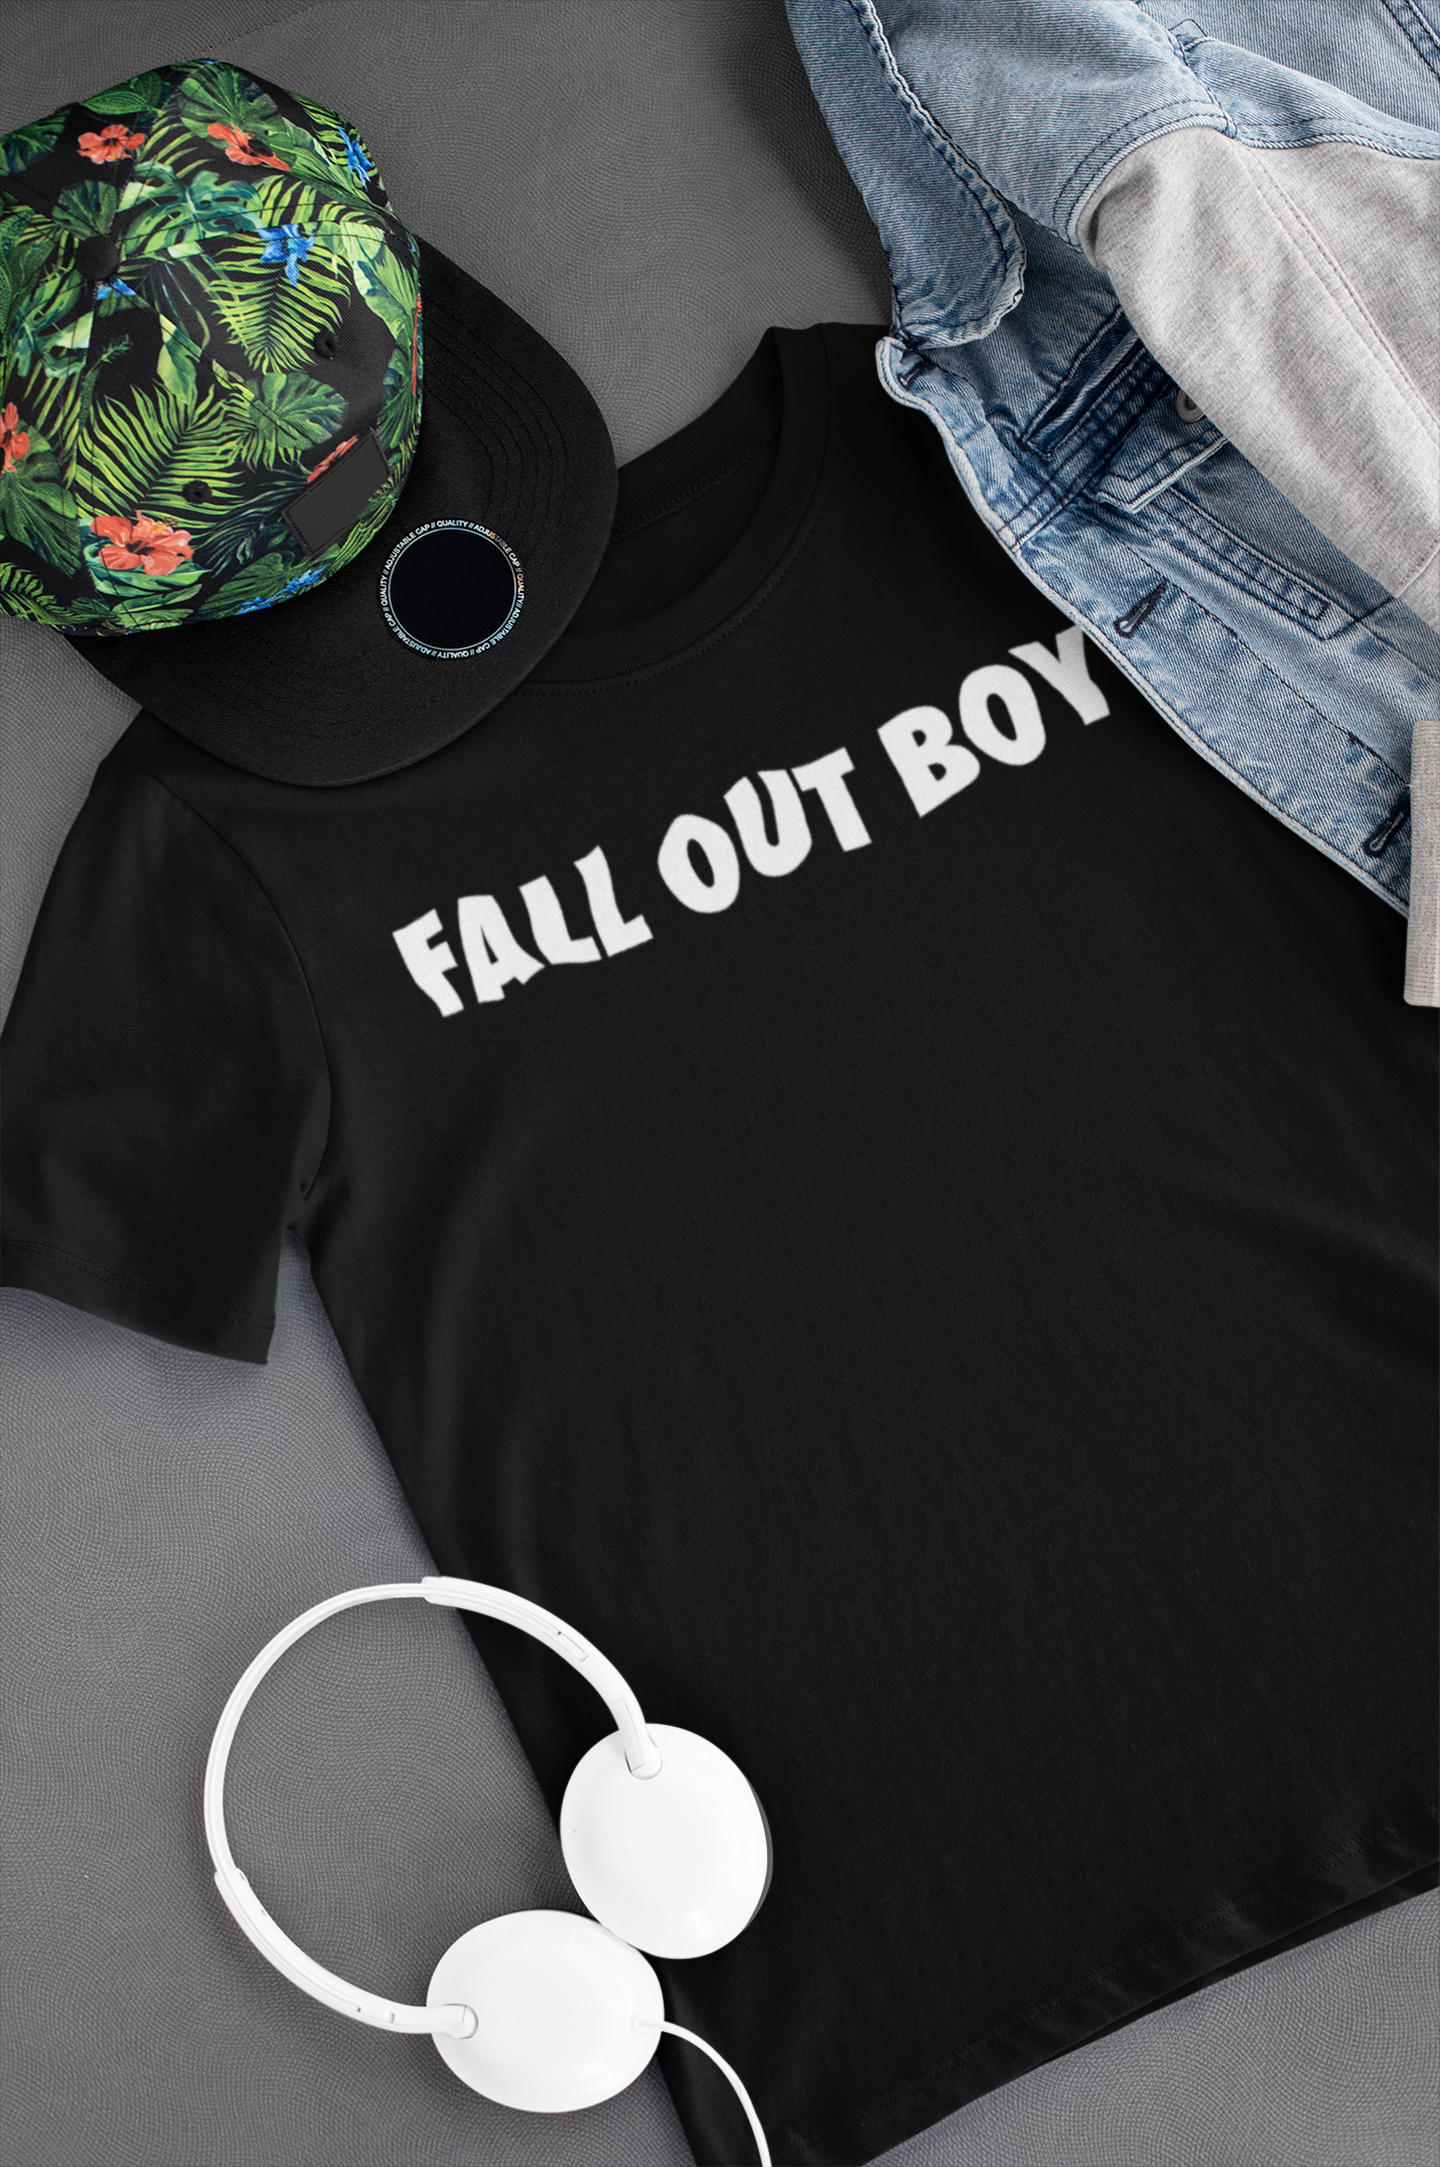 Camiseta "Fall Out Boy" Clássica - Música